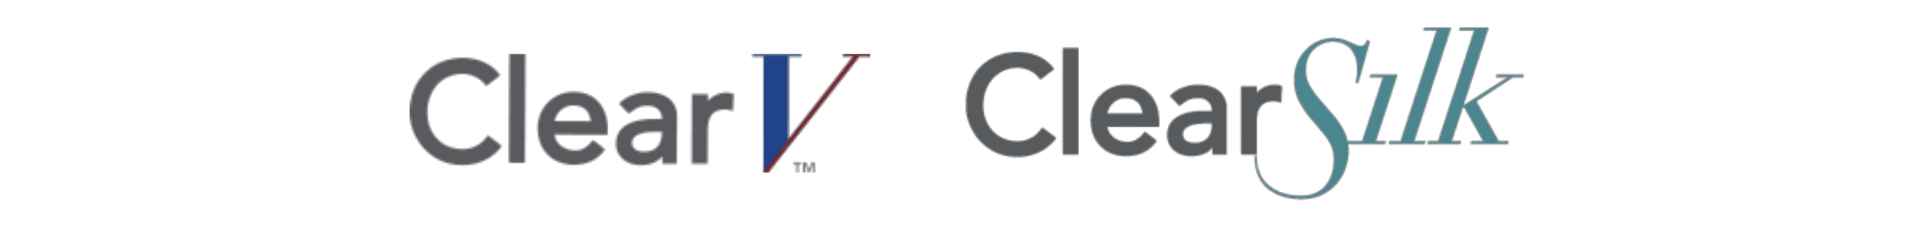 CLearV ClearSilk Logobanner